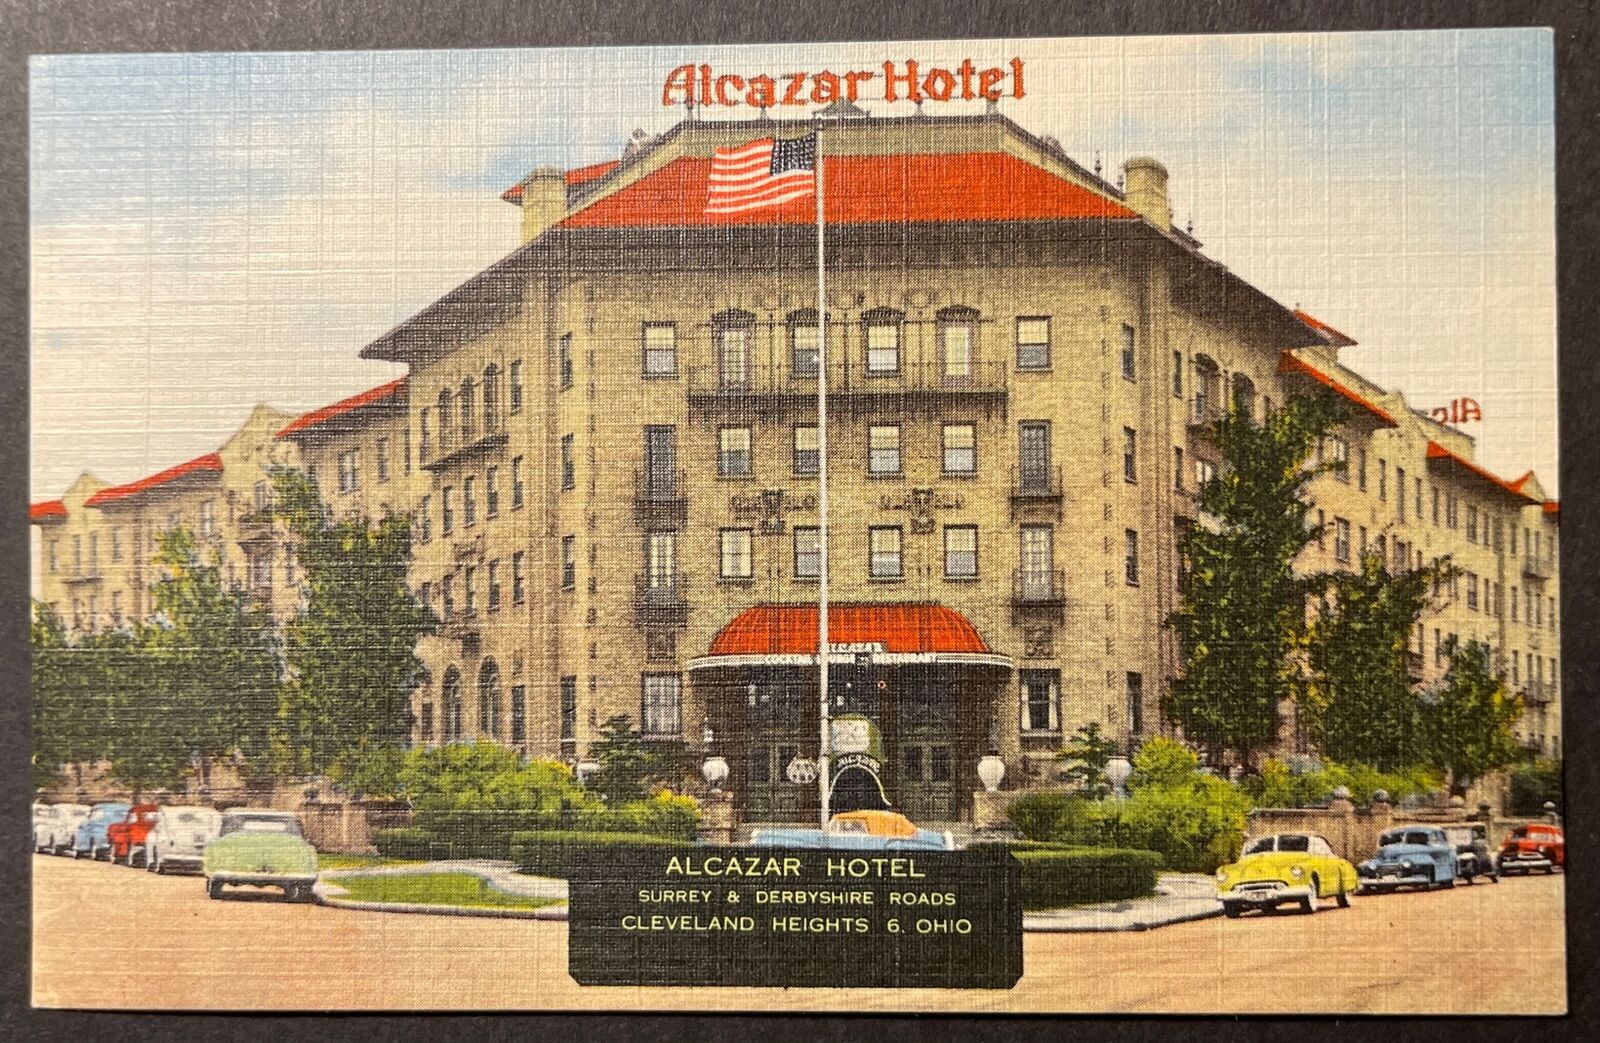 Alcazar Hotel Cleveland Heights Ohio linen